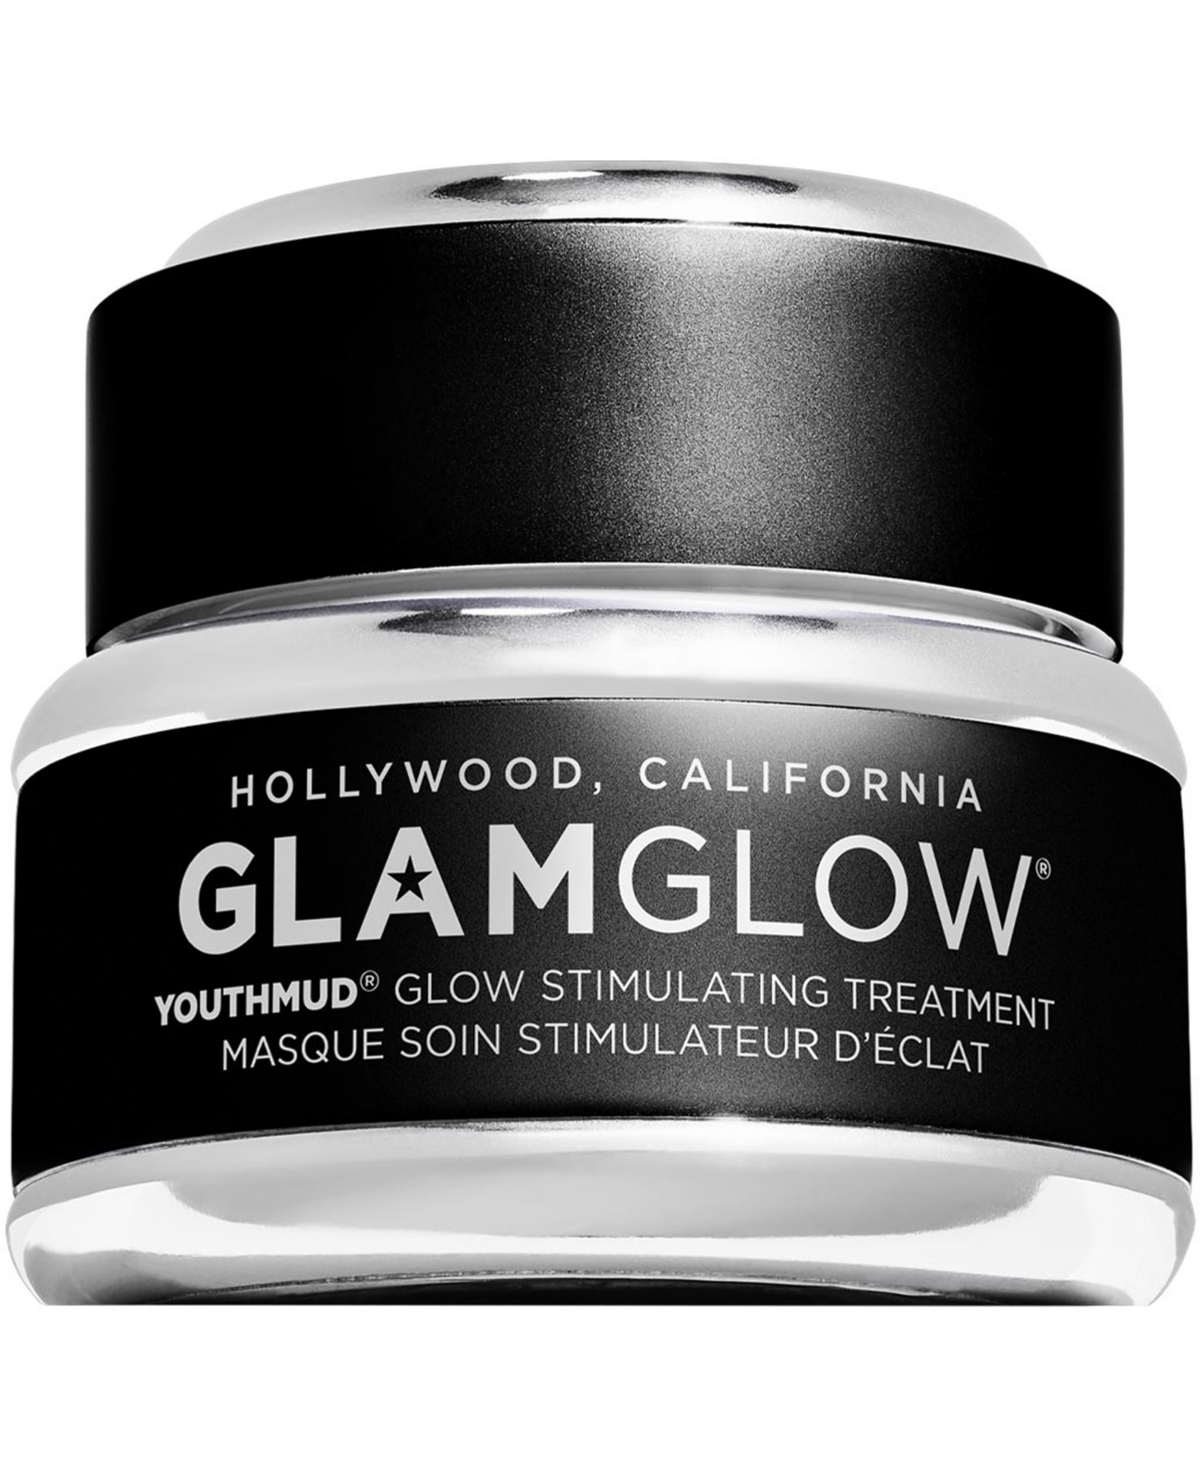 Glamglow Youthmud Glow Stimulating Treatment Mask, 0.5-oz.